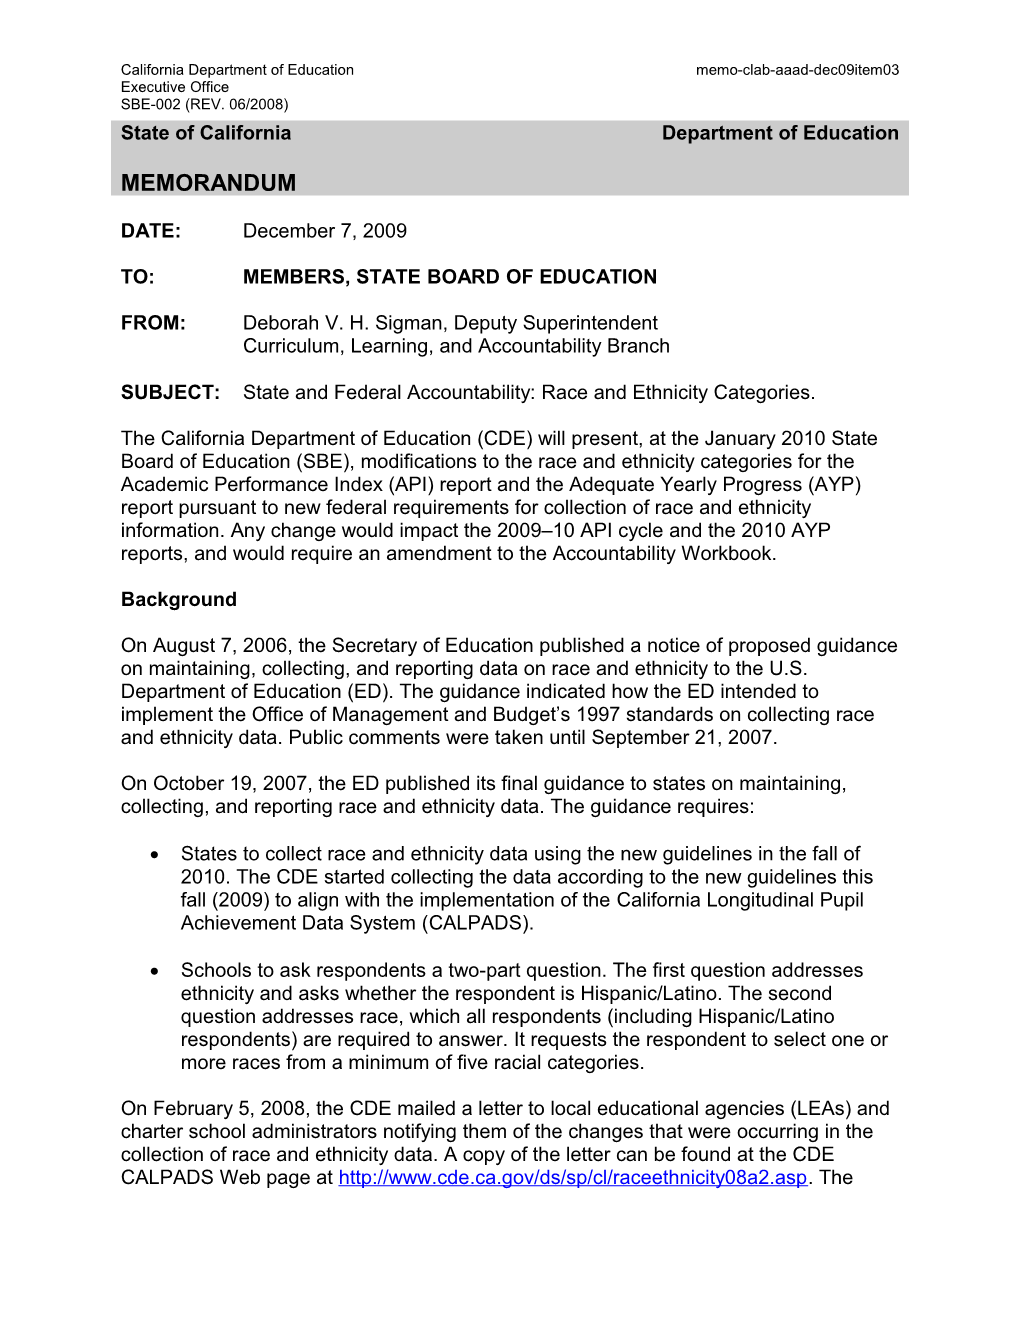 December 2009 CLAB Item 07 - Information Memorandum (CA State Board of Education)